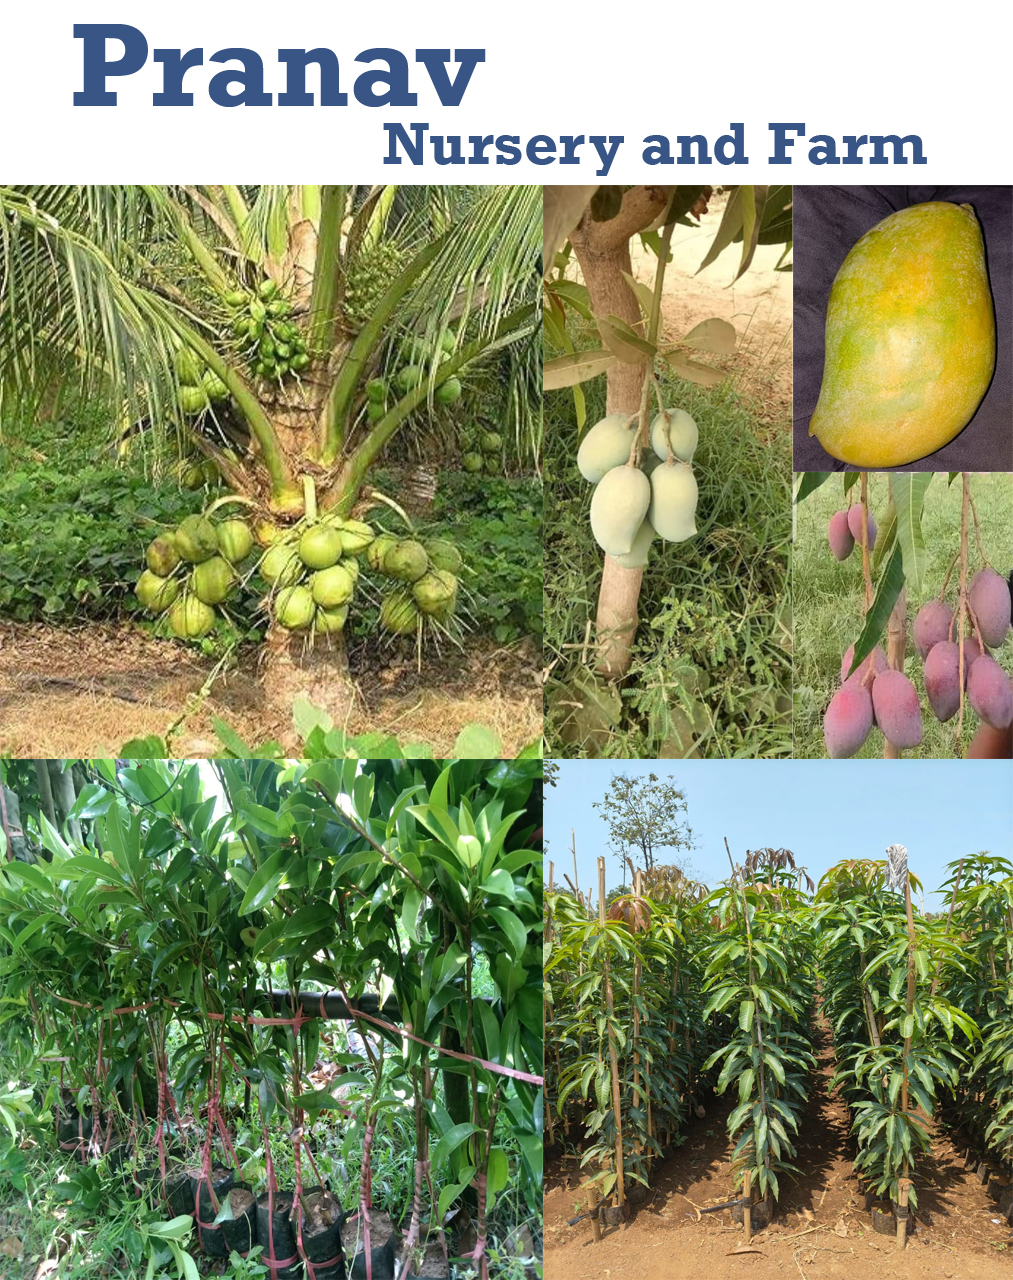 PRANAV NURSERY AND FARM | SolapurMall.com